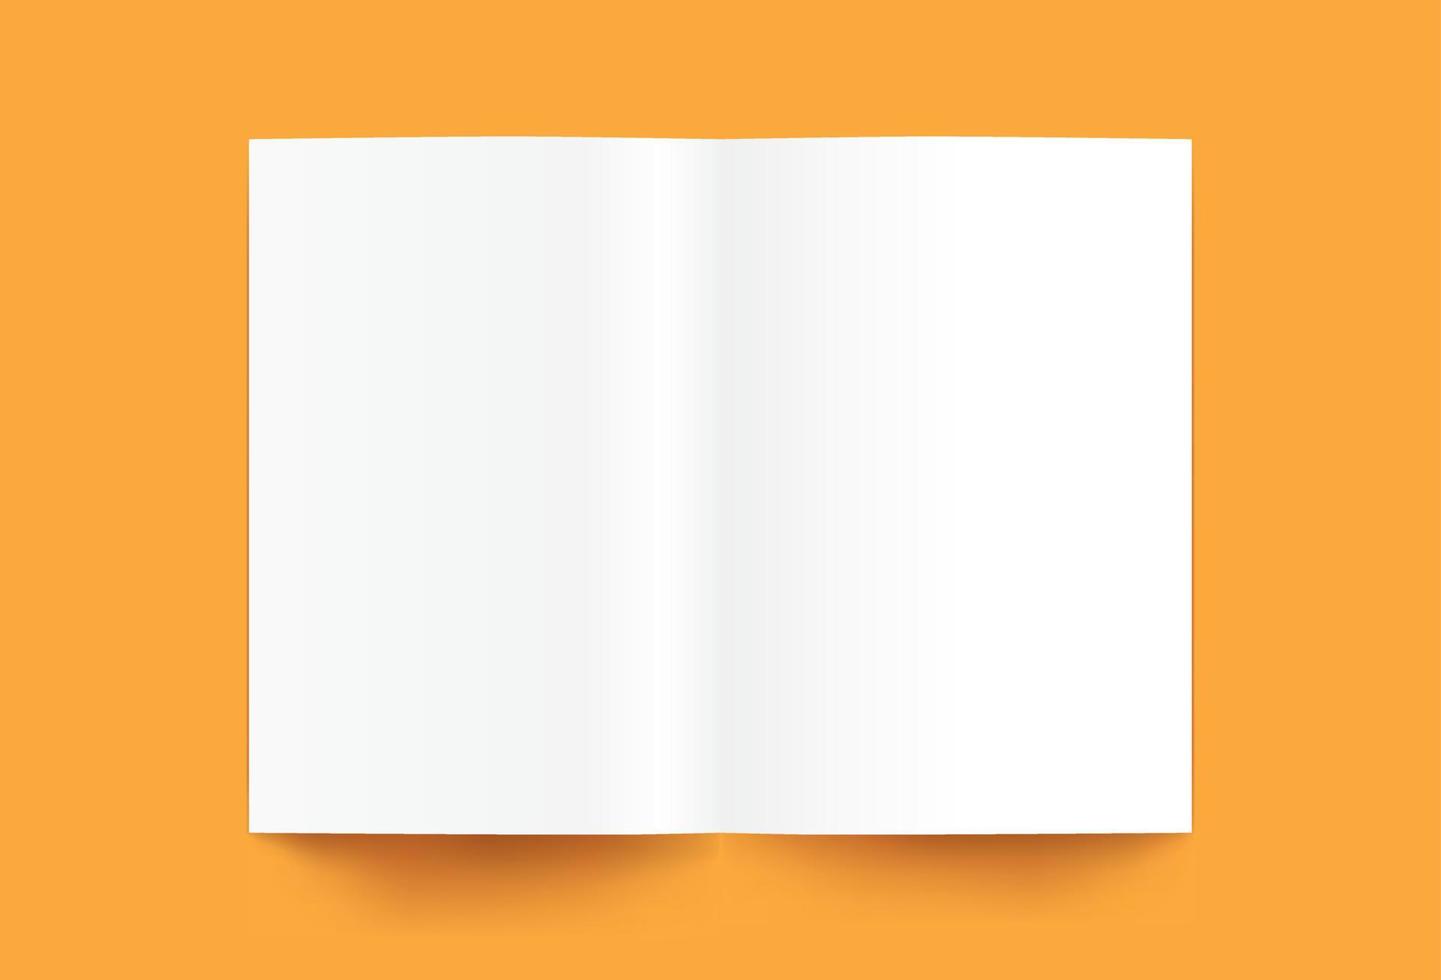 realistische buchmagazin cover leere modellvorlage präsentationsbroschüre notizbuch business office dokumentillustration vektor